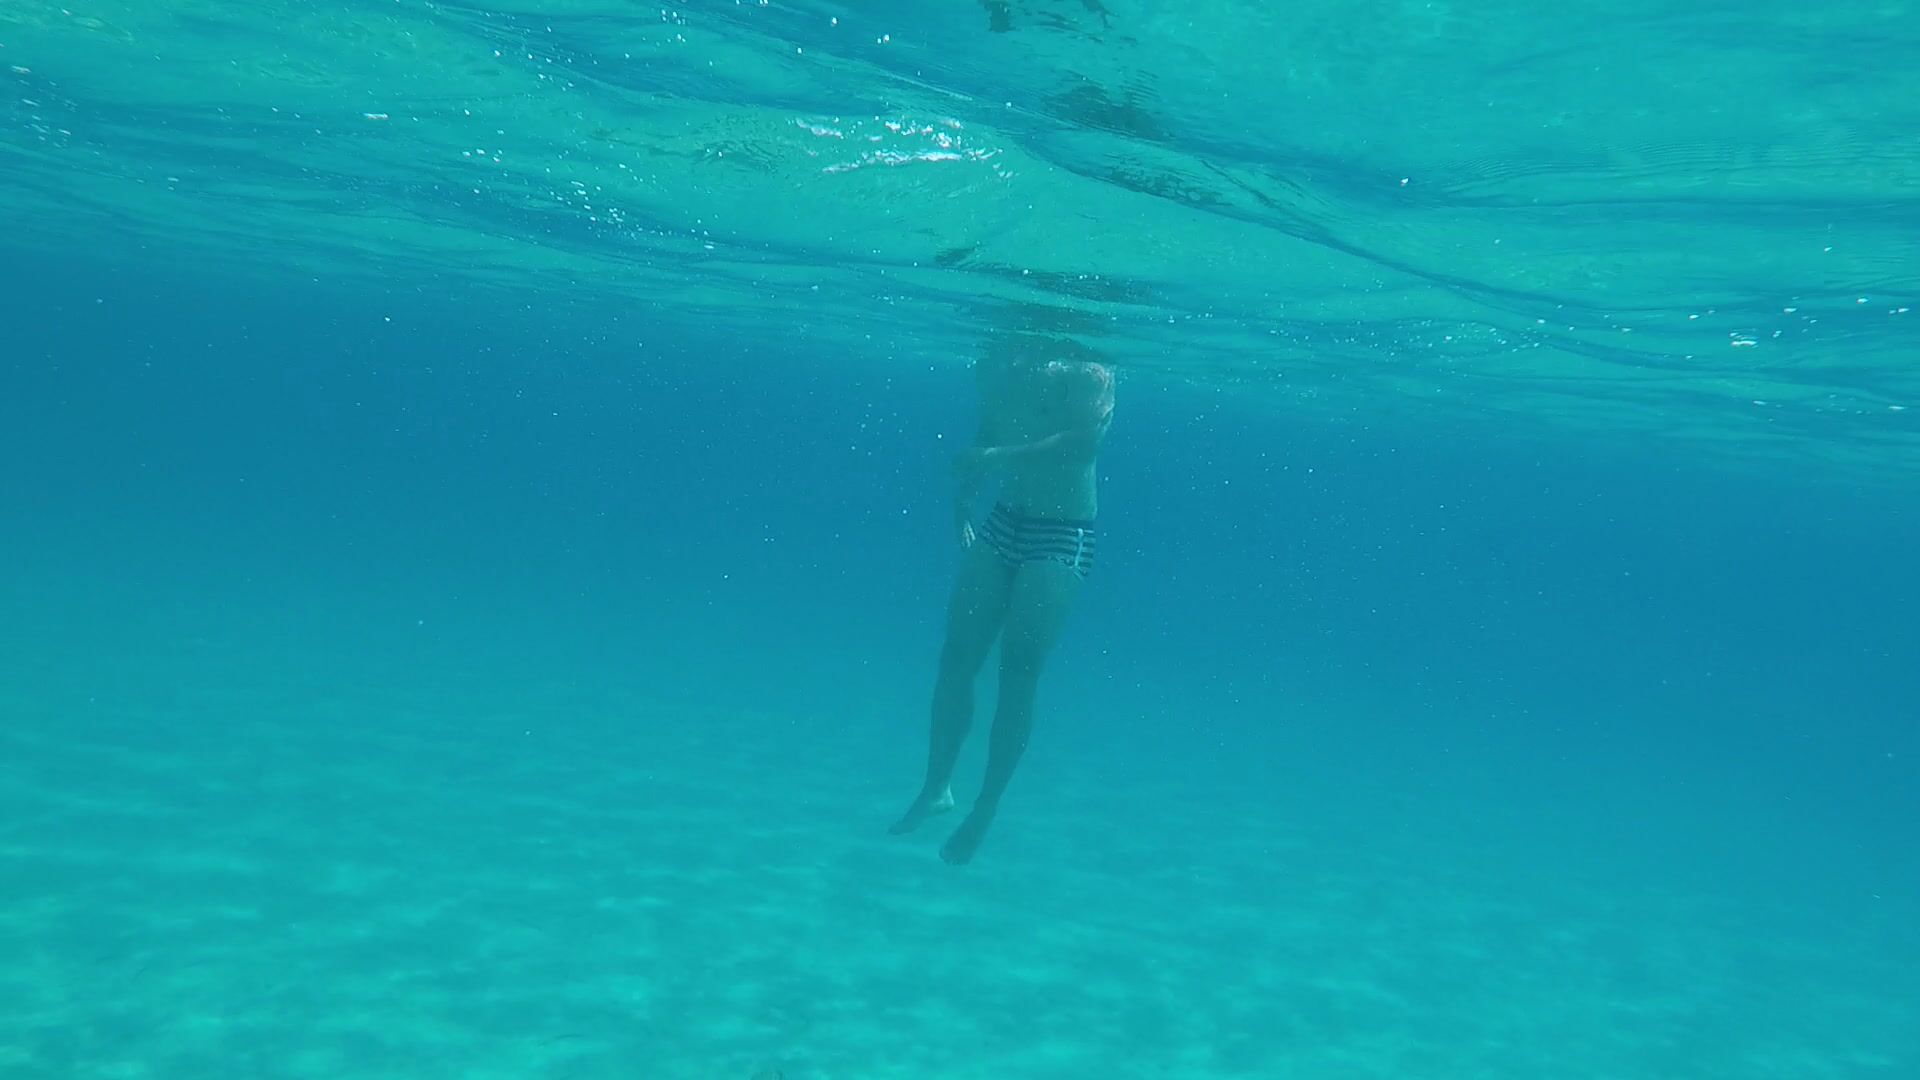 Some underwater swimming